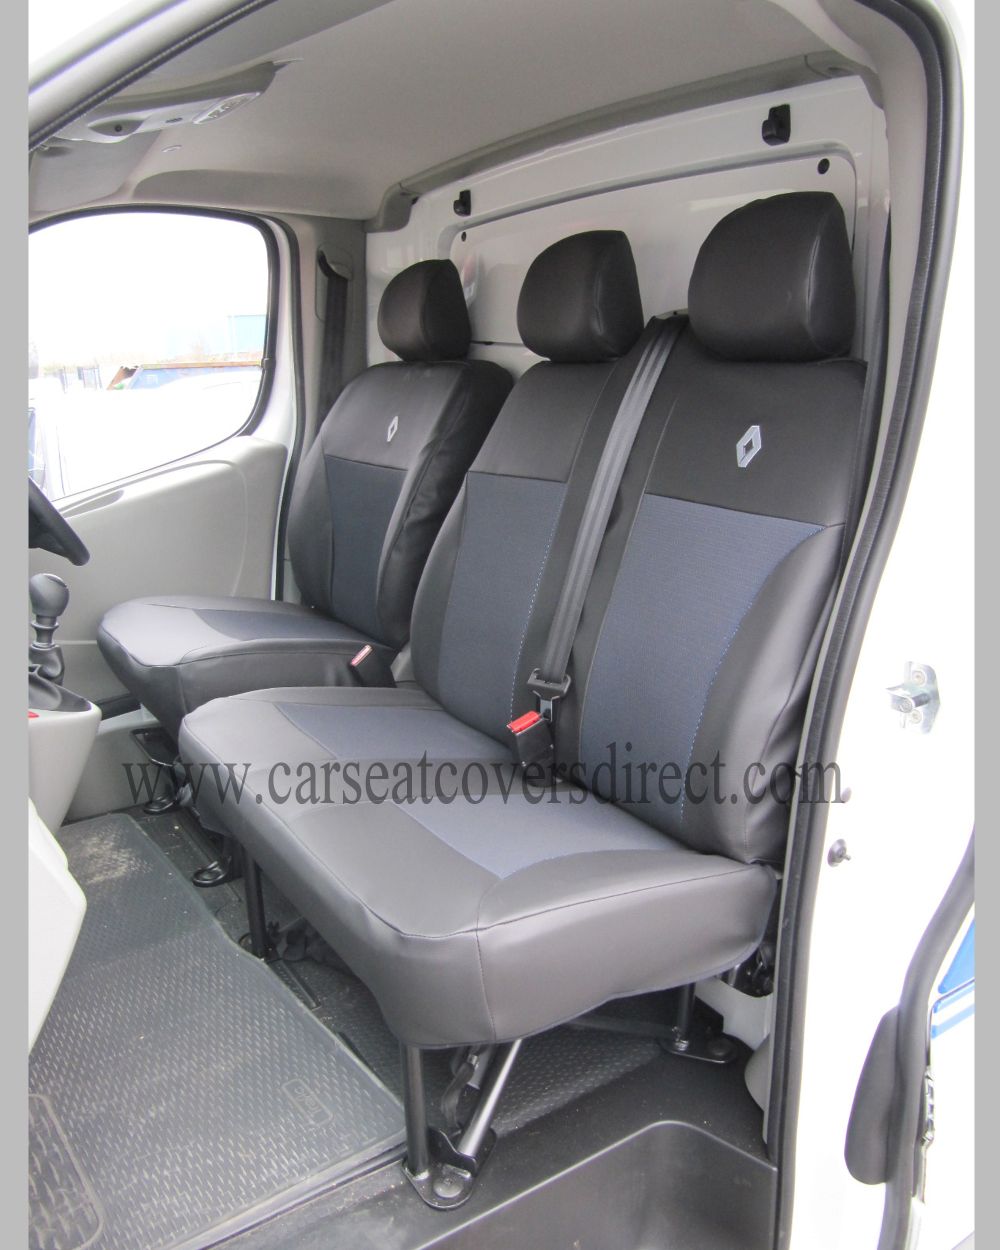 Audi A4 seat covers - Passenger seat